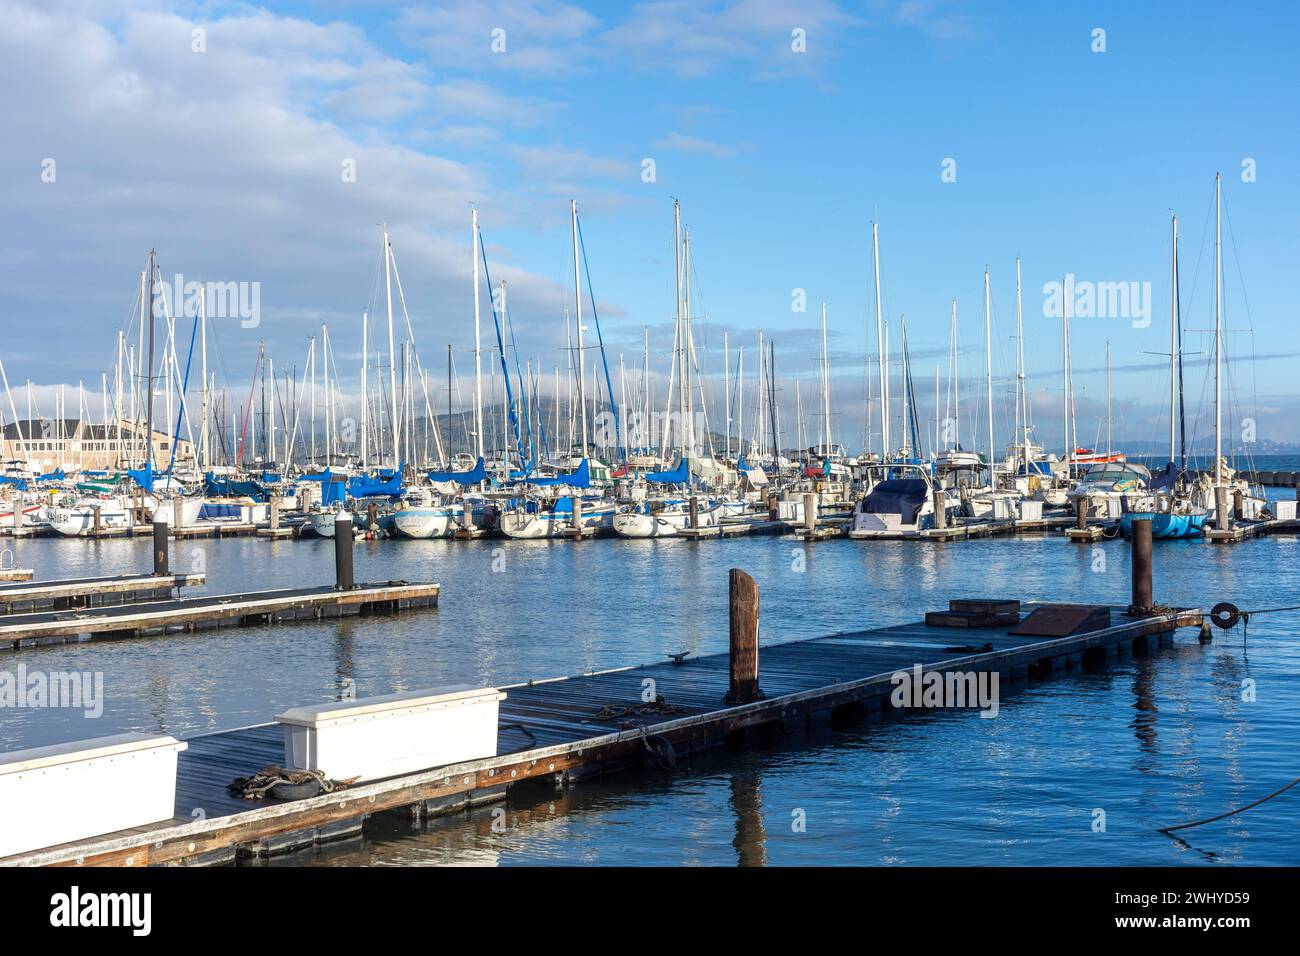 Boat marina at Pier 39, Fisherman's Wharf District, San Francisco, California, United States Stock Photo